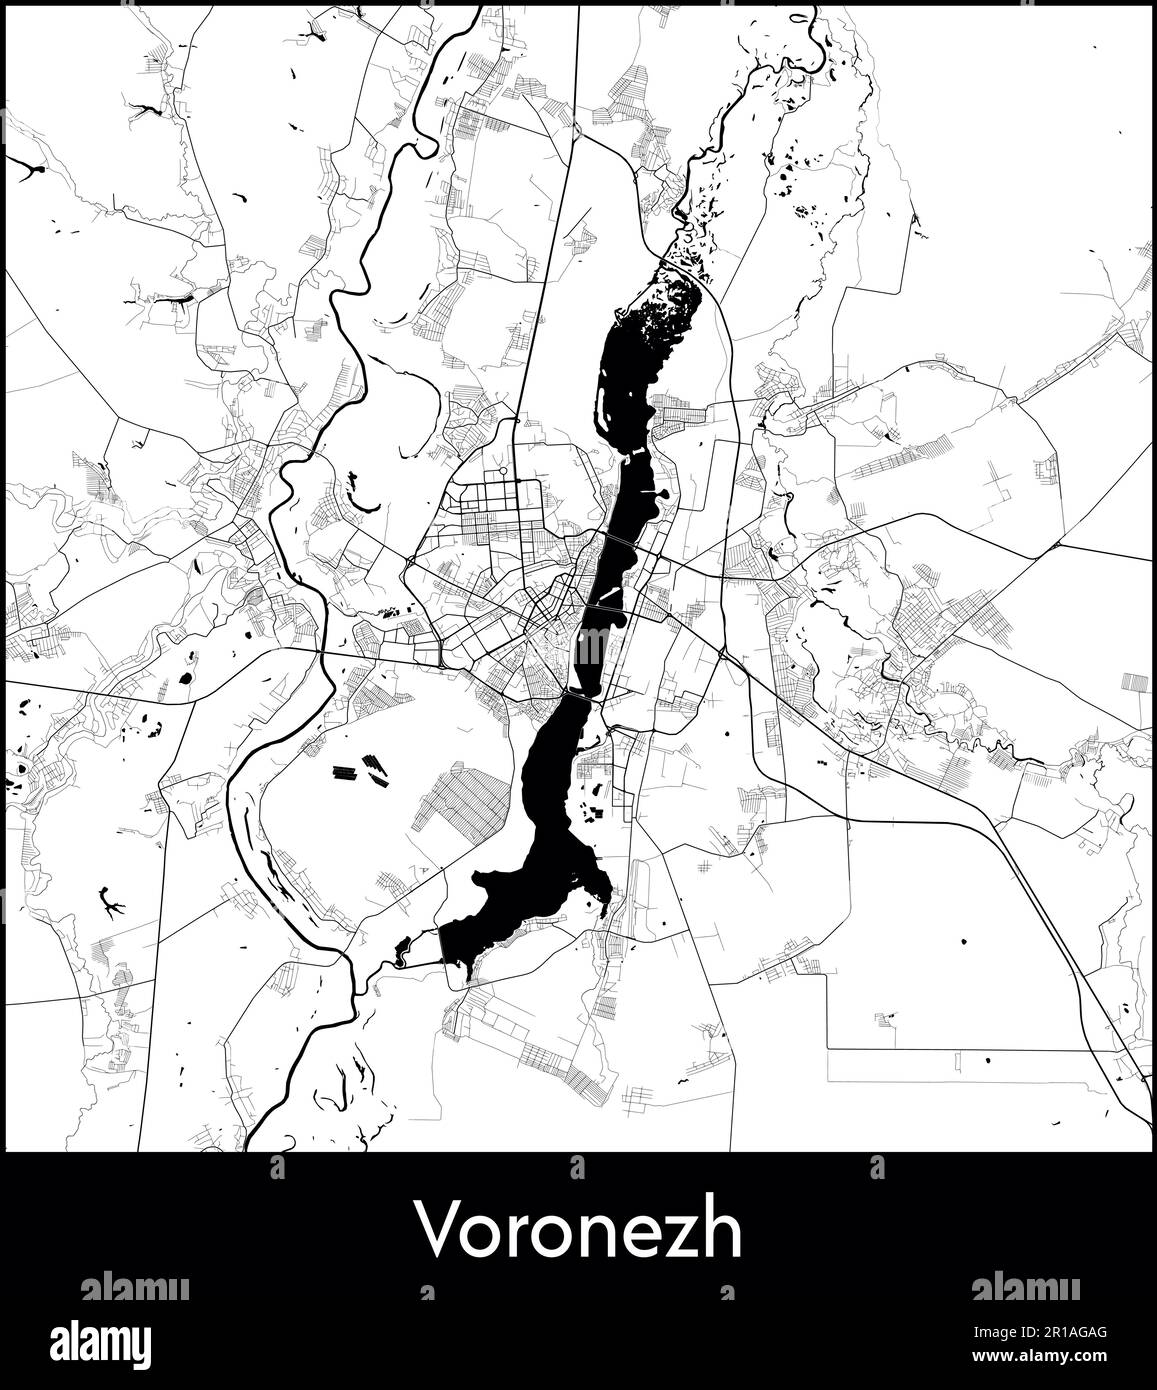 City Map Europe Russia Voronezh vector illustration Stock Vector